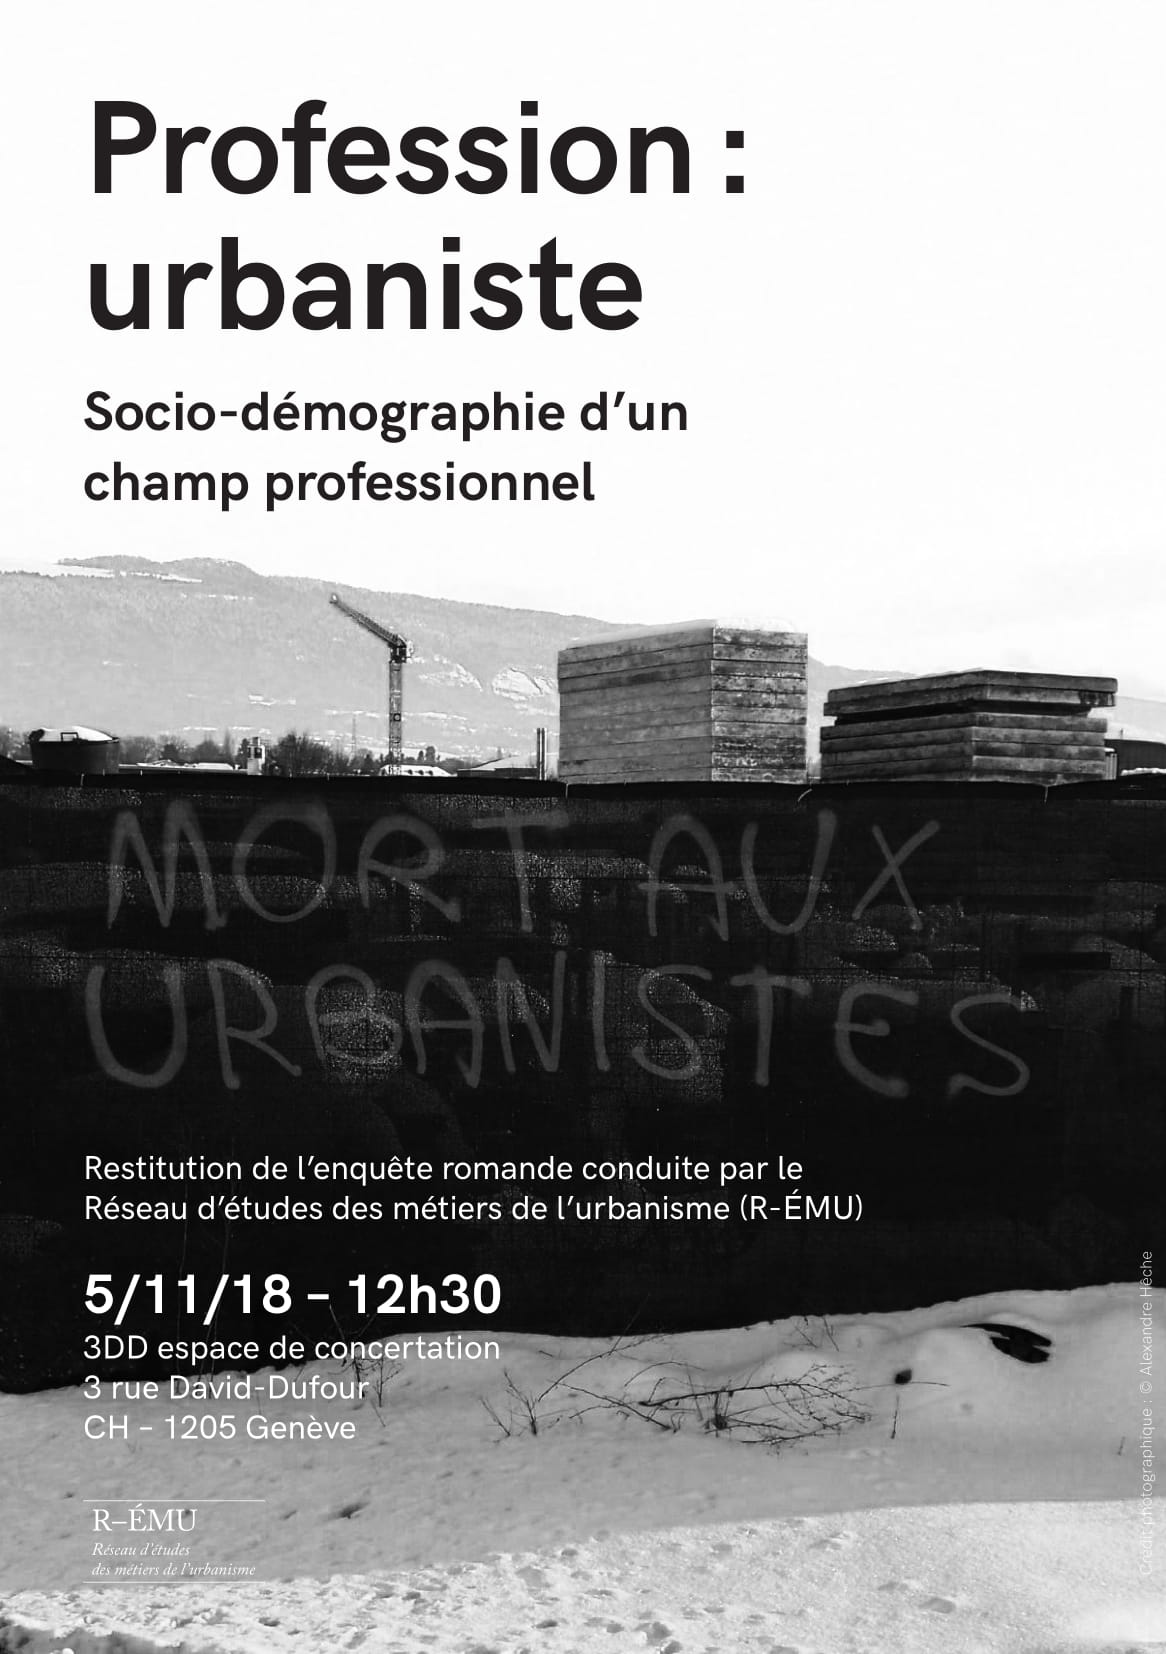 Profession urbaniste - Flyer